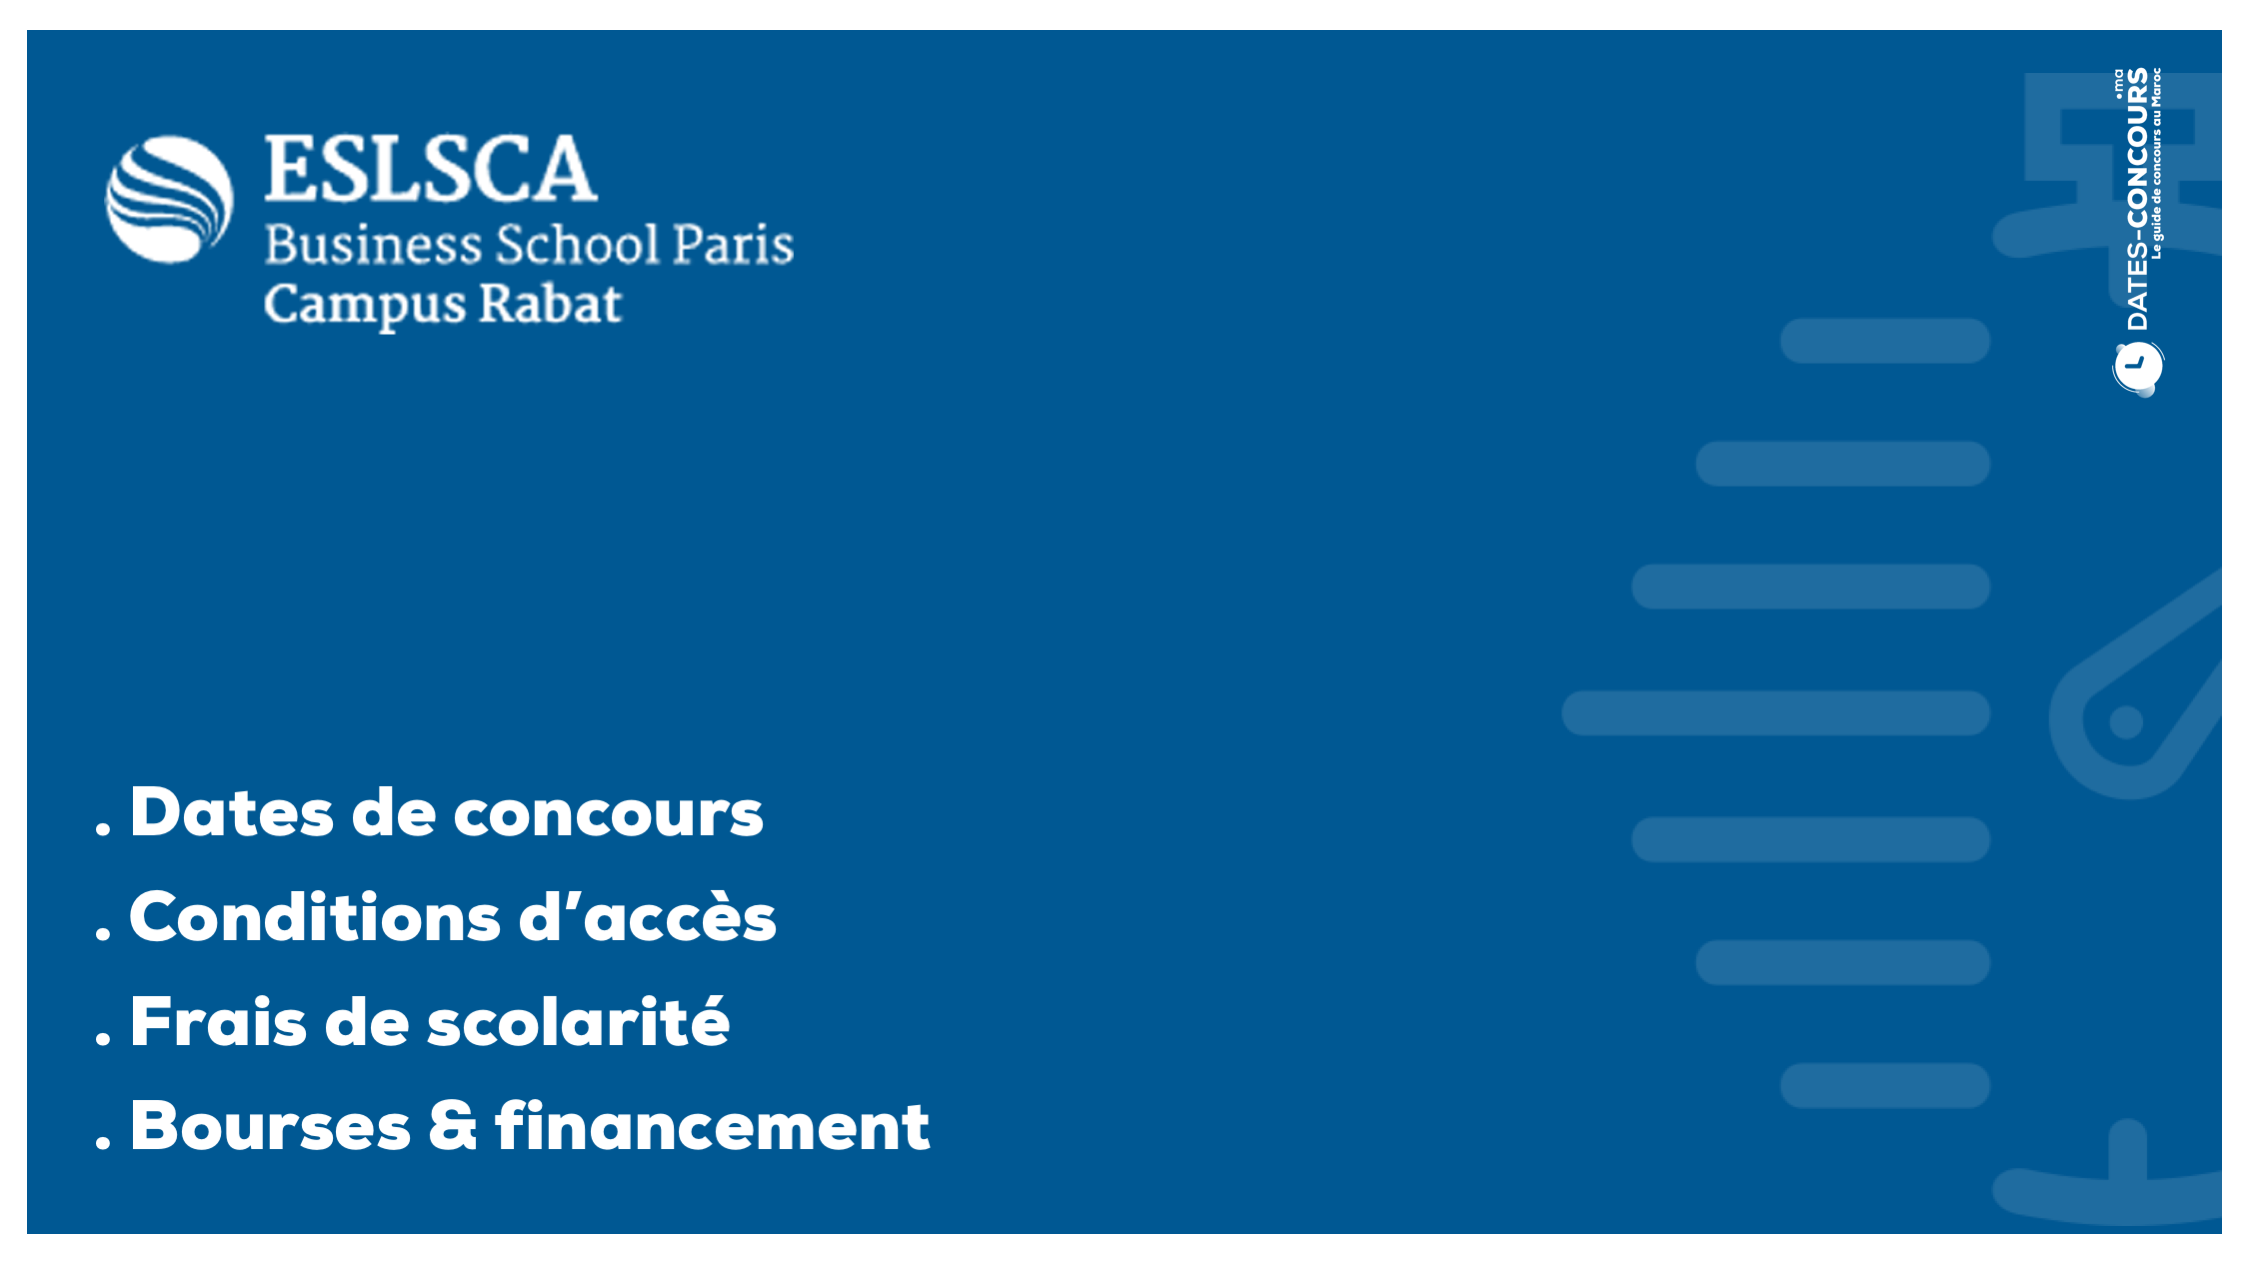 ESLSCA Business School Paris